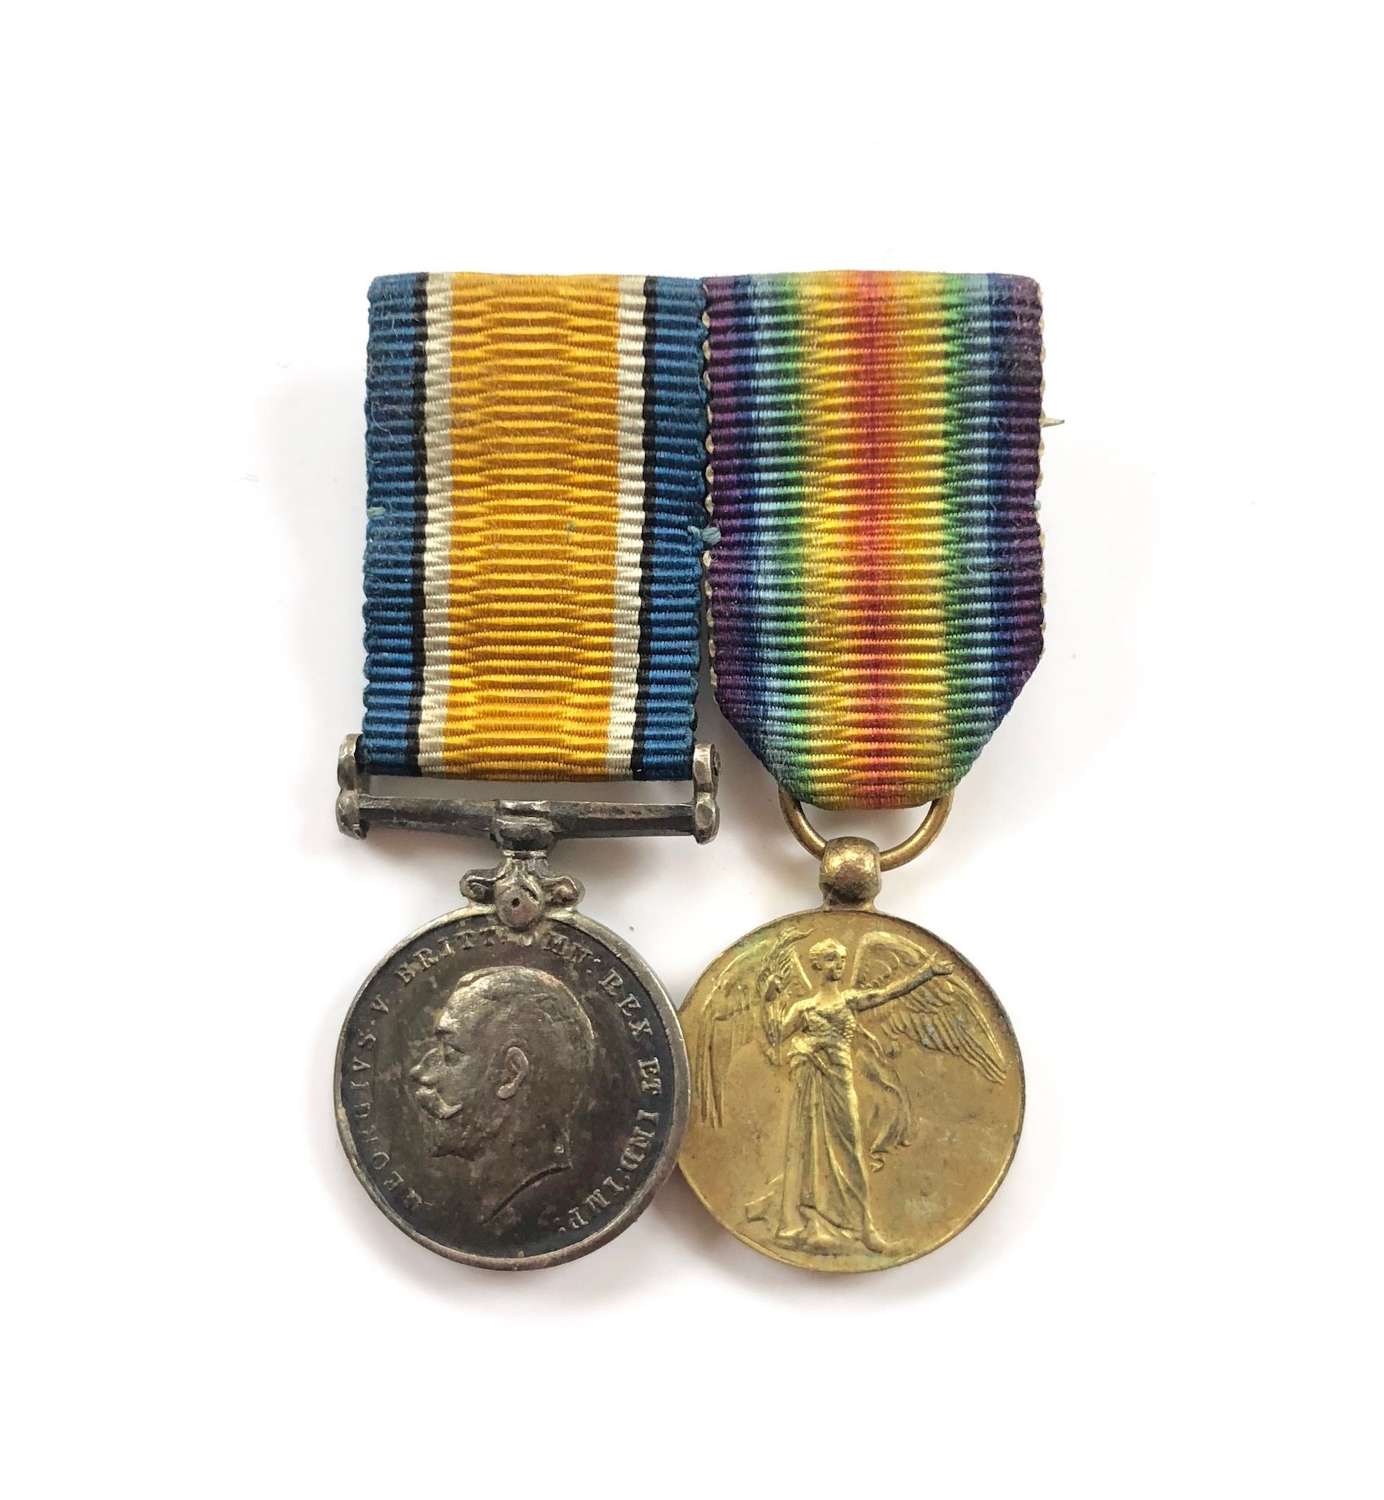 WW1 Miniature Medal Pair.